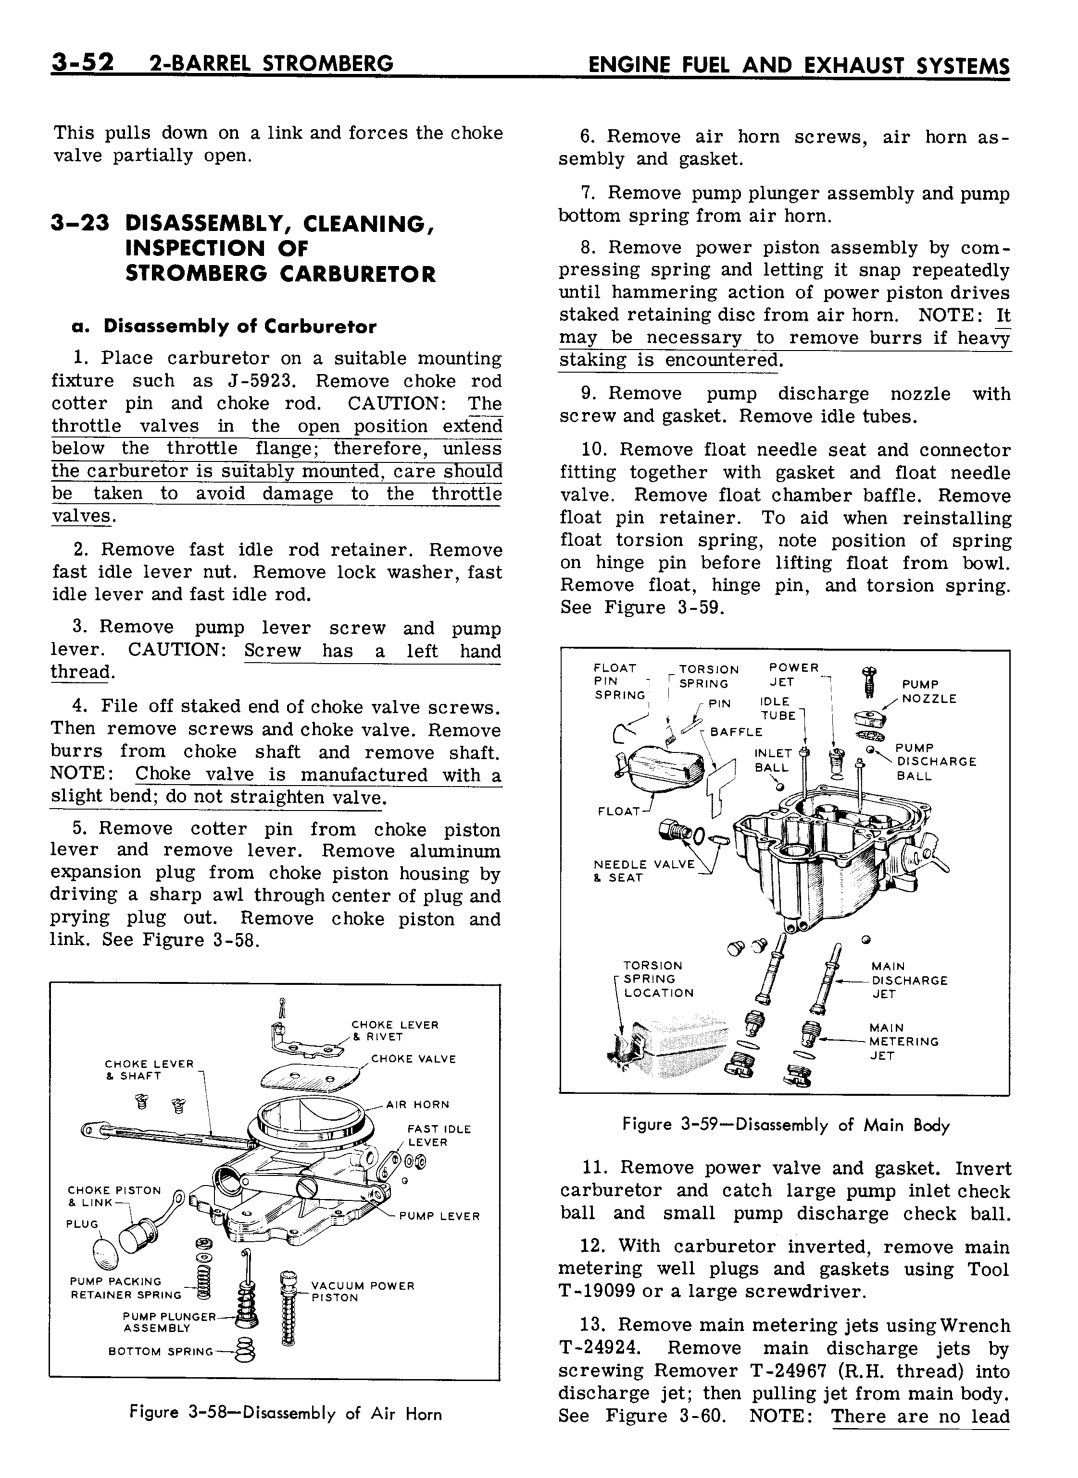 n_04 1961 Buick Shop Manual - Engine Fuel & Exhaust-052-052.jpg